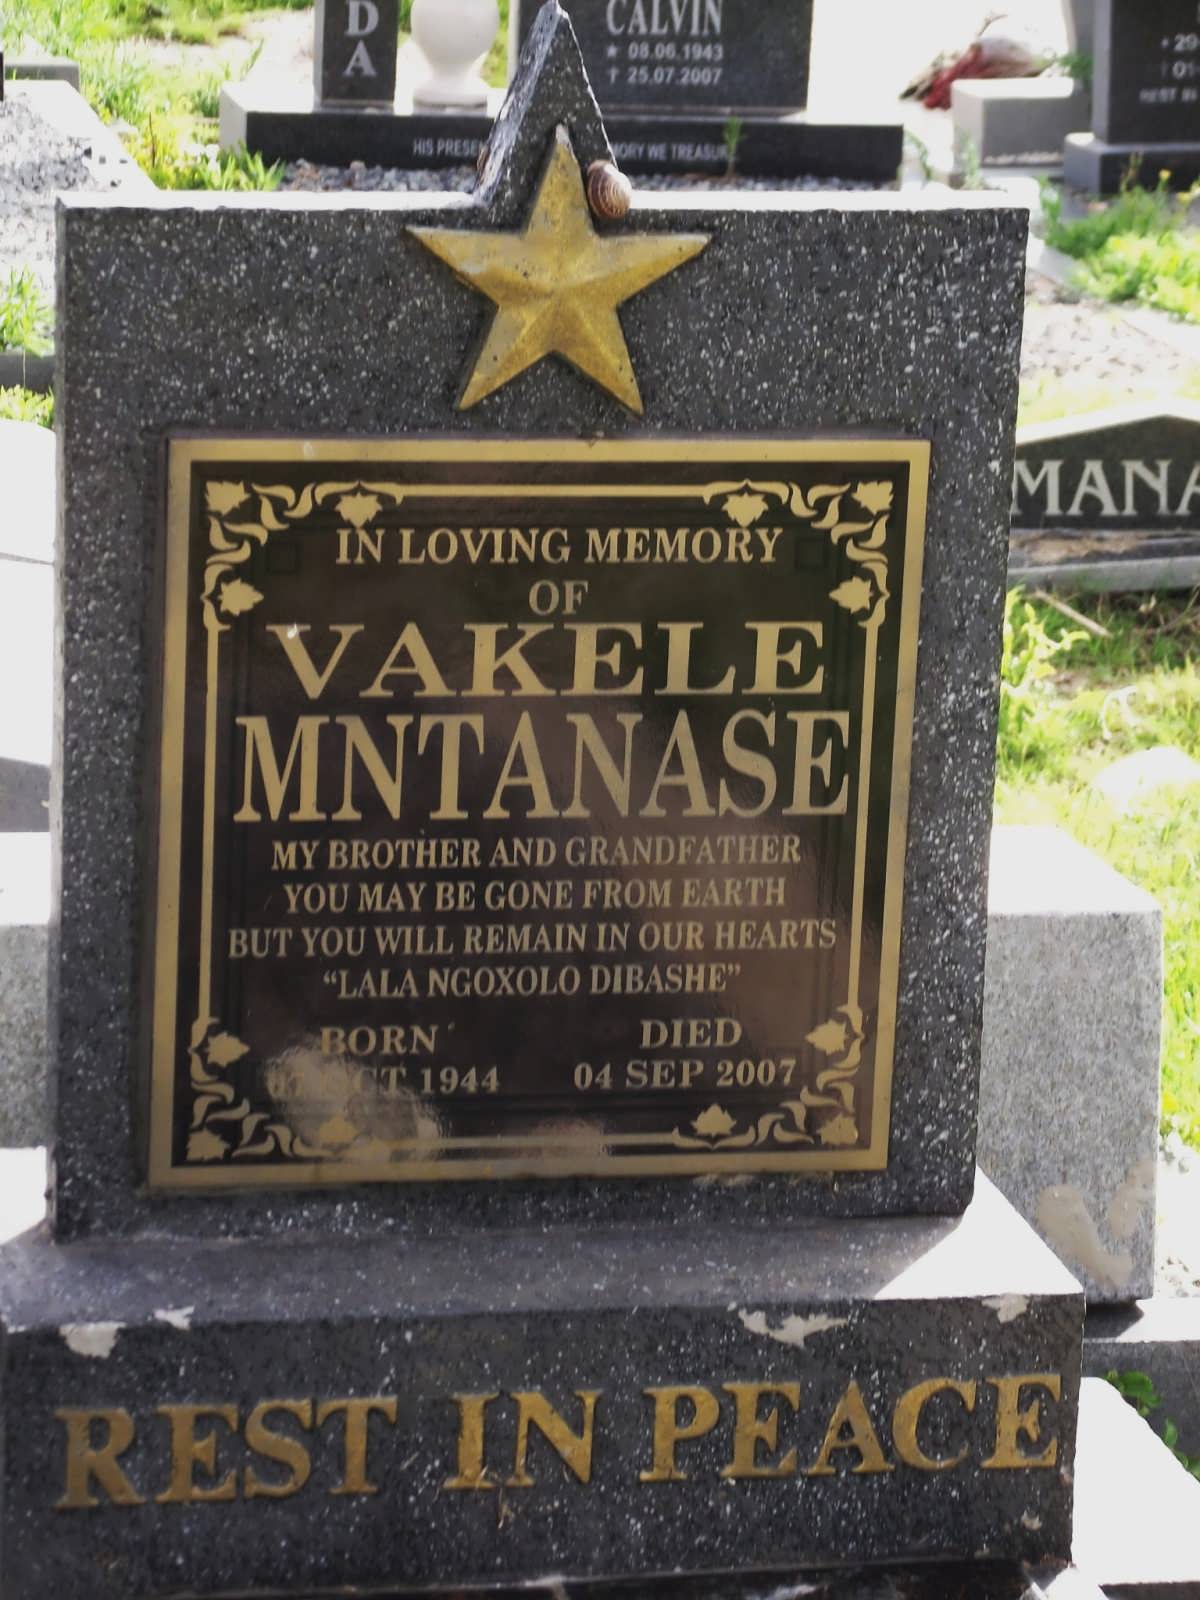 MNTANASE Vakele 1944-2007